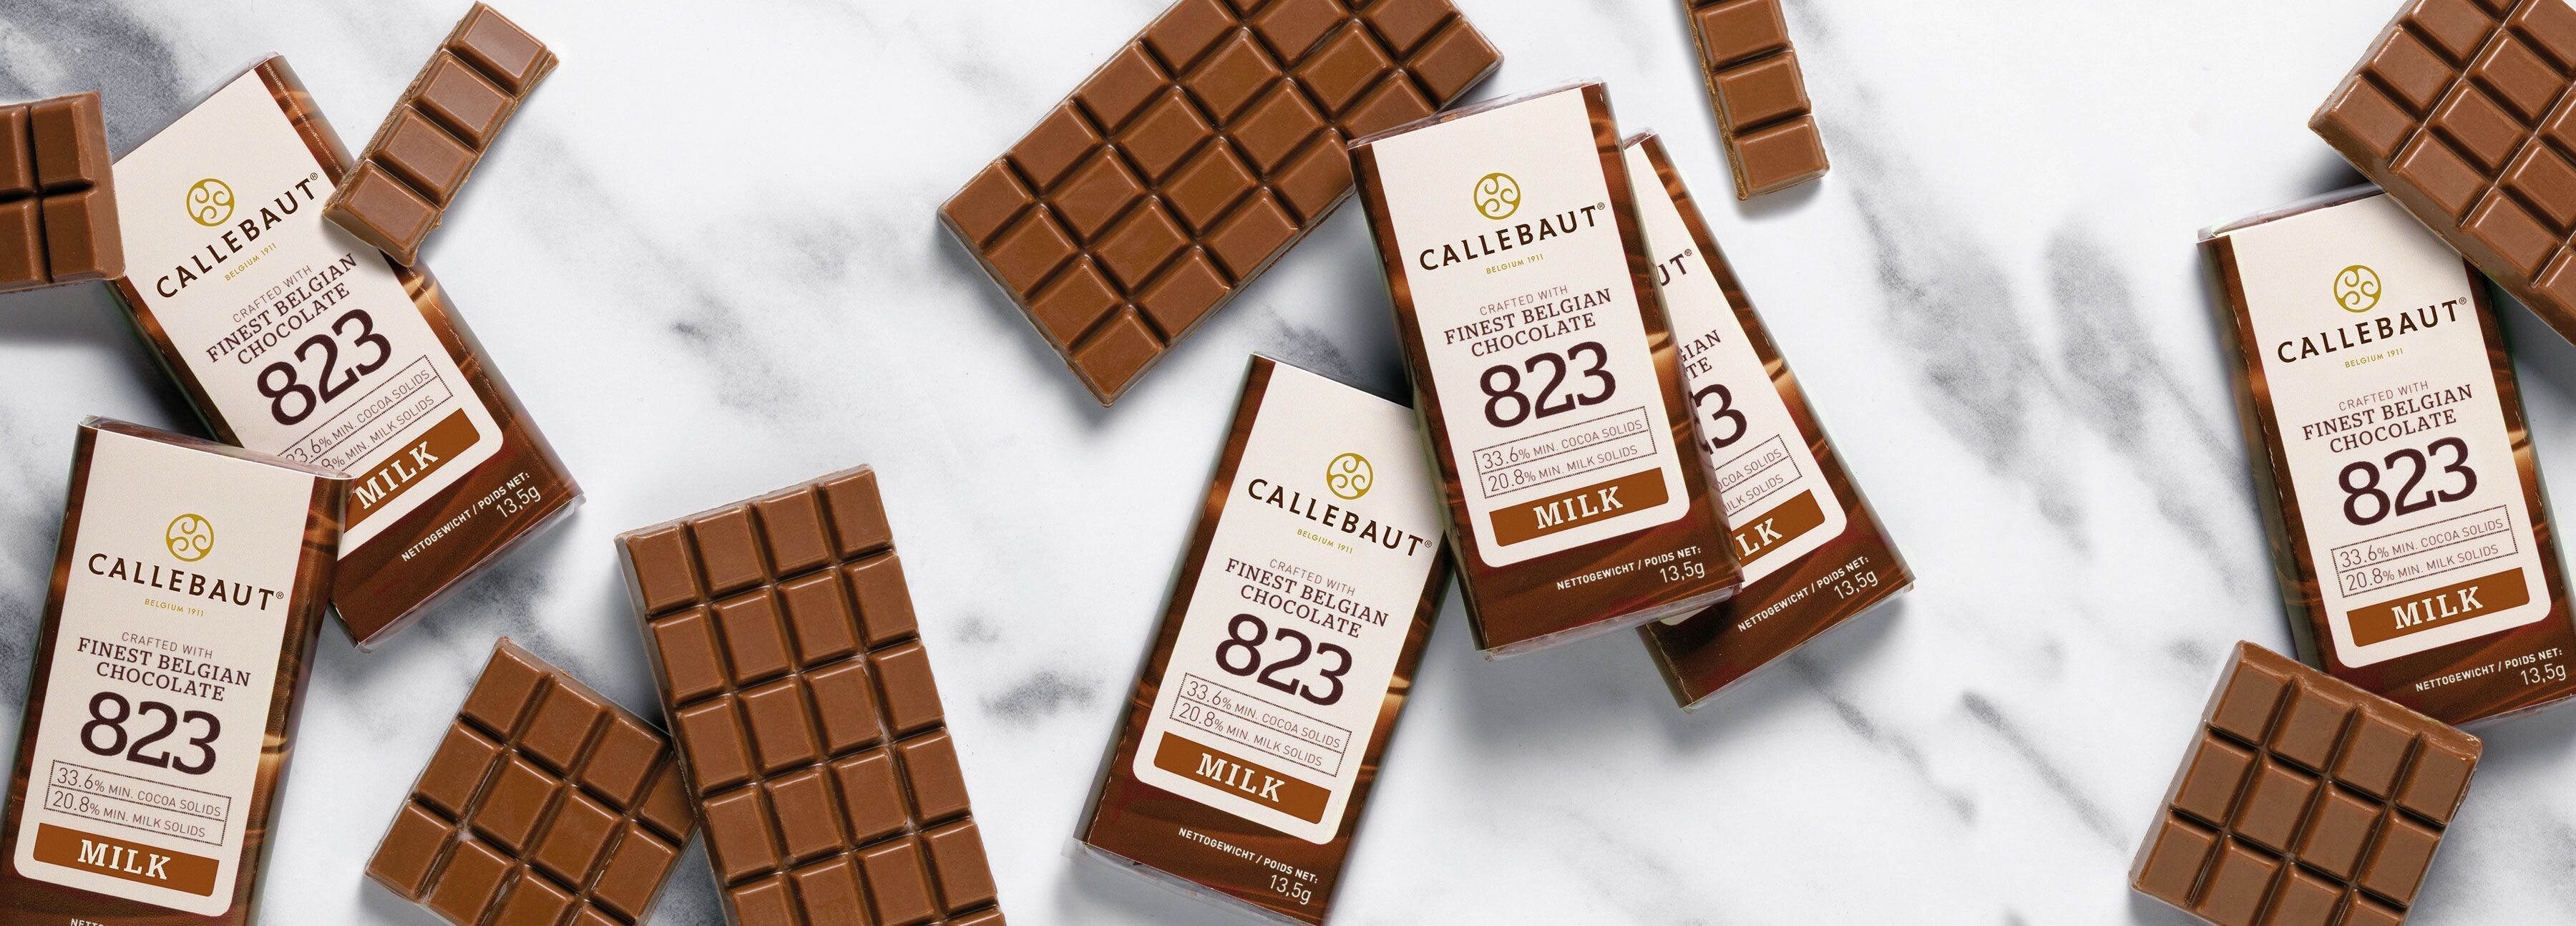 Callebaut Napolitains Chocolate 823 Milk 75pcs Wrapped Individually